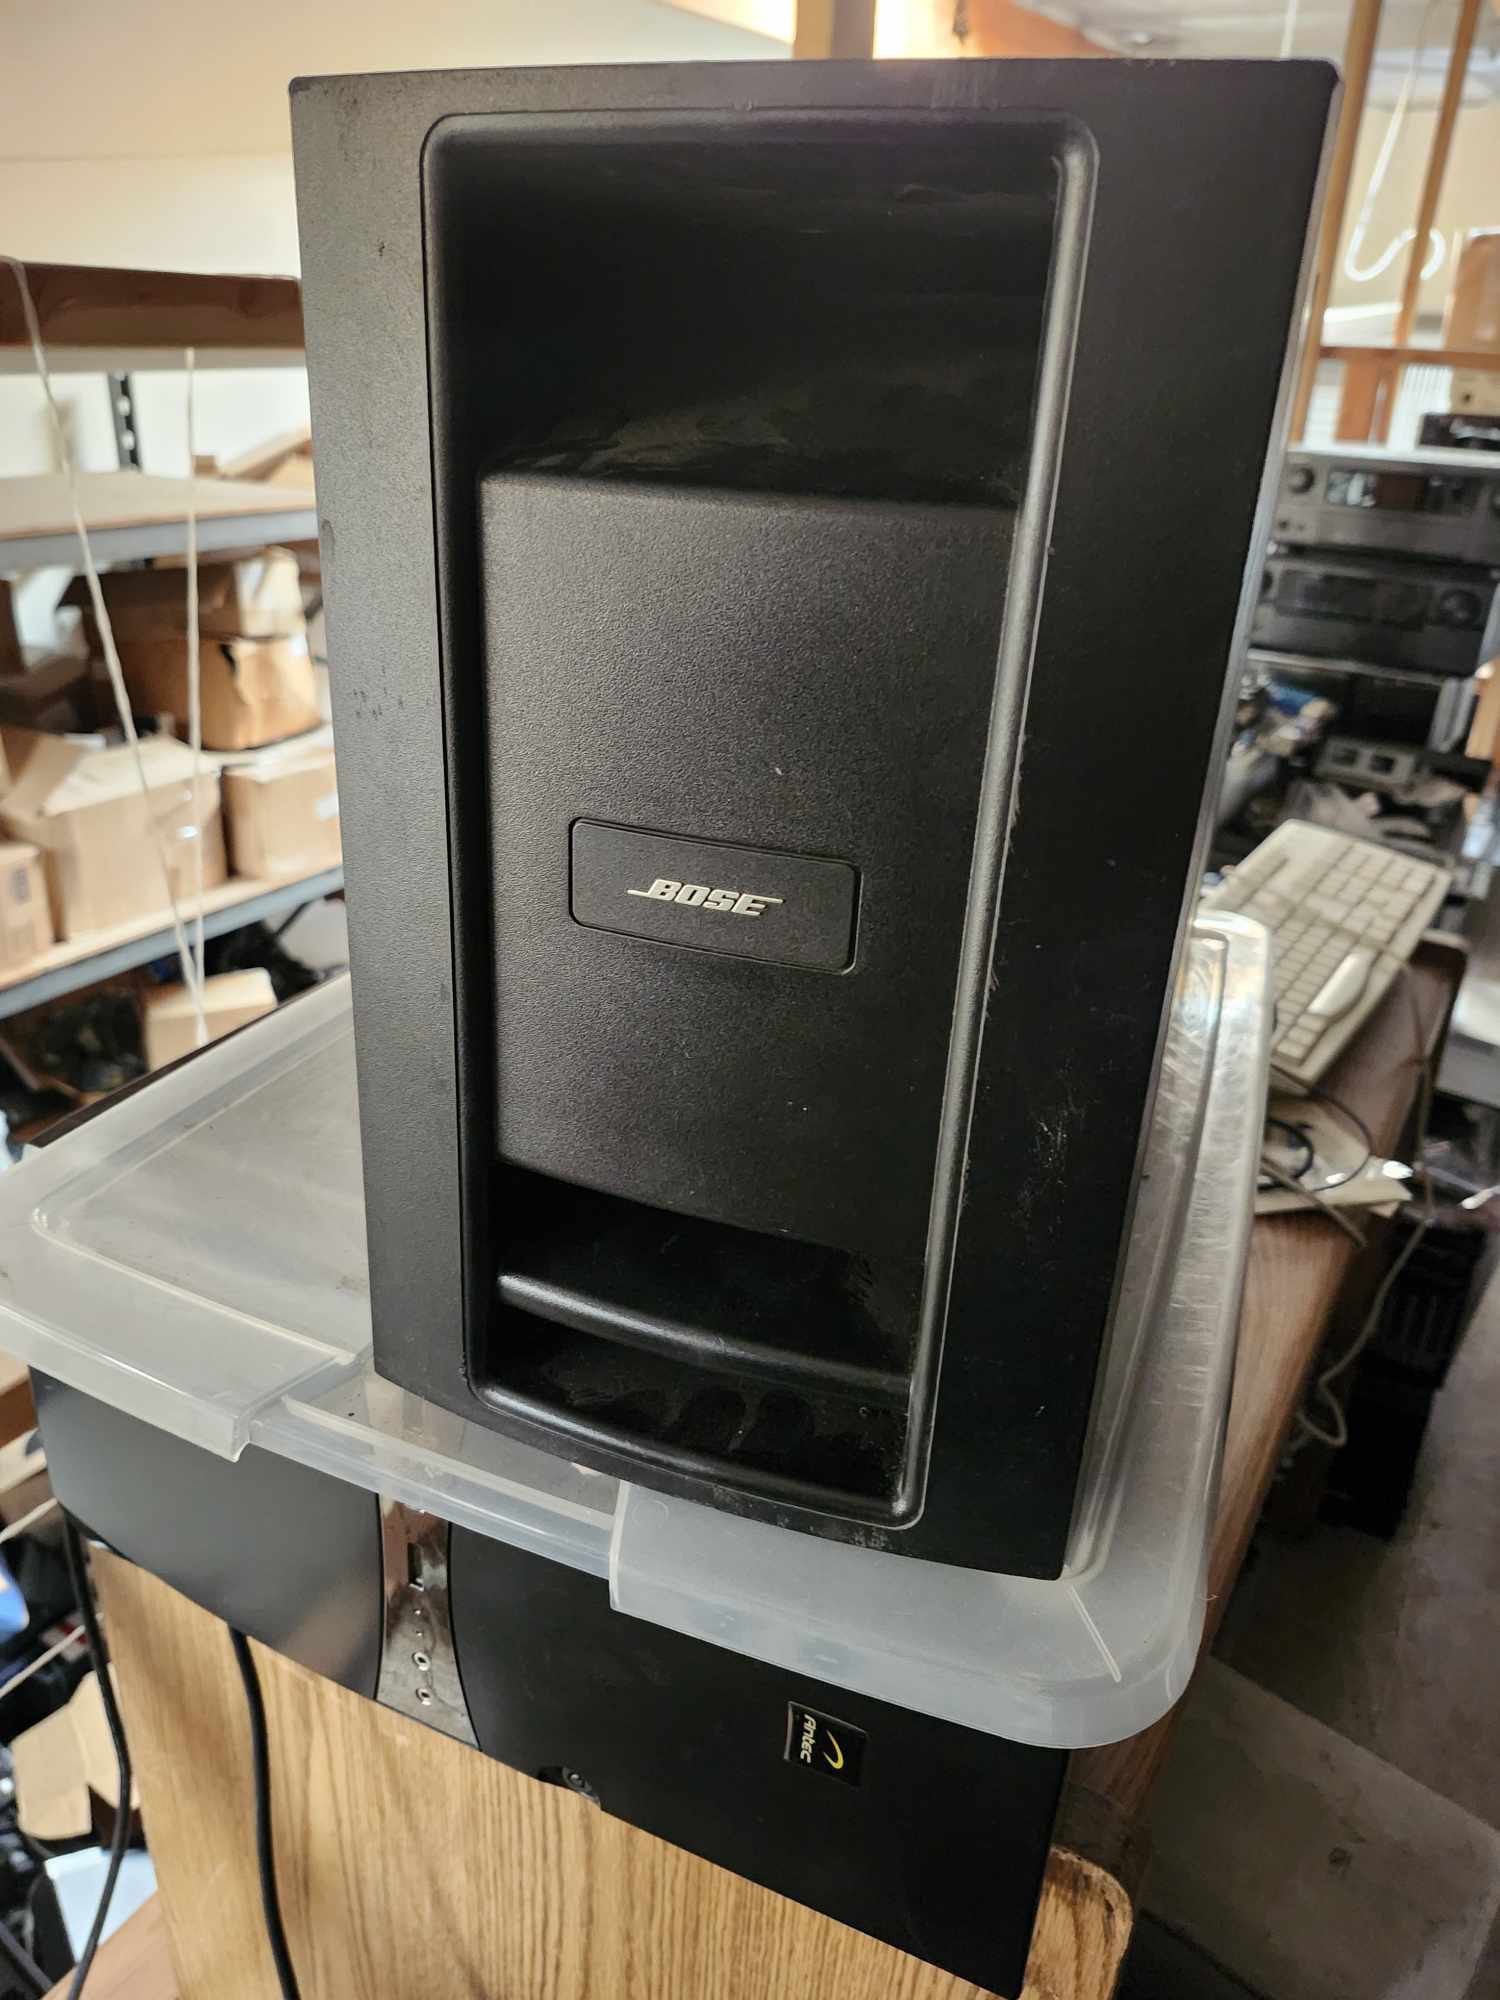 Bose Lifestyle PS48 Black Subwoofer Sub Speaker - Tested Working